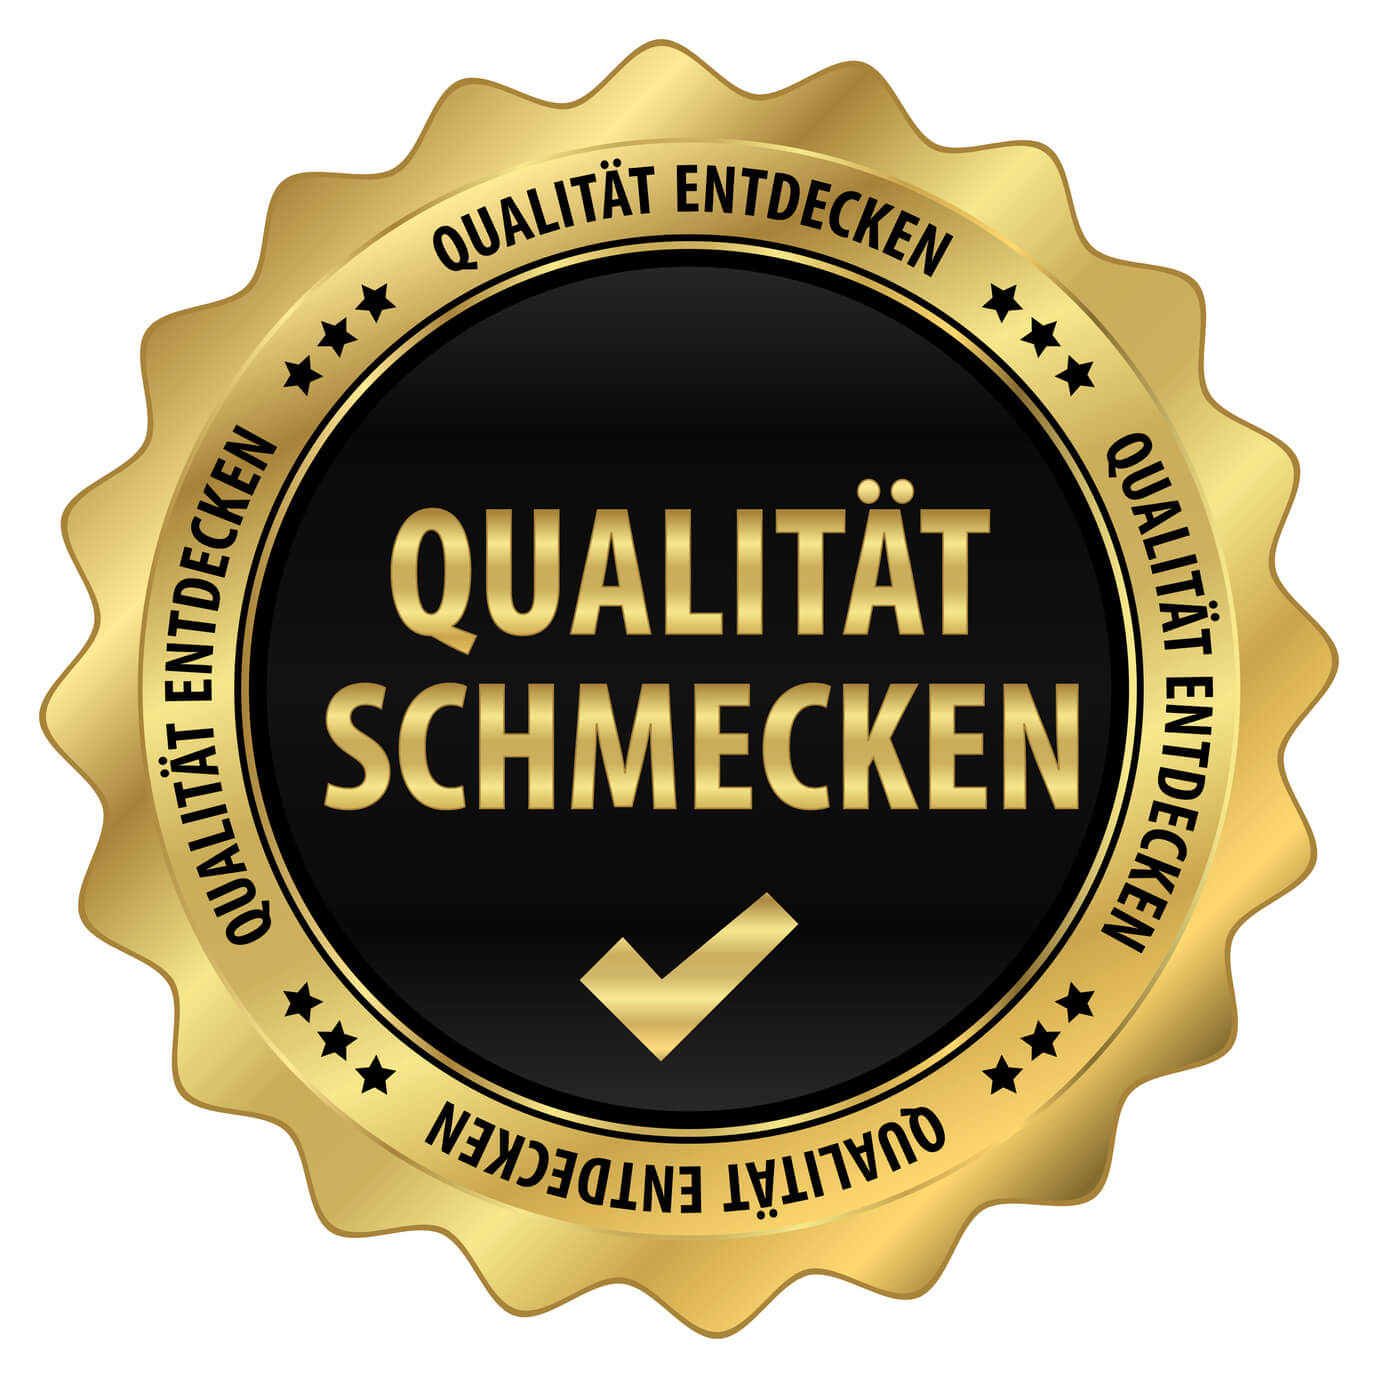 Qualitat_schmecken